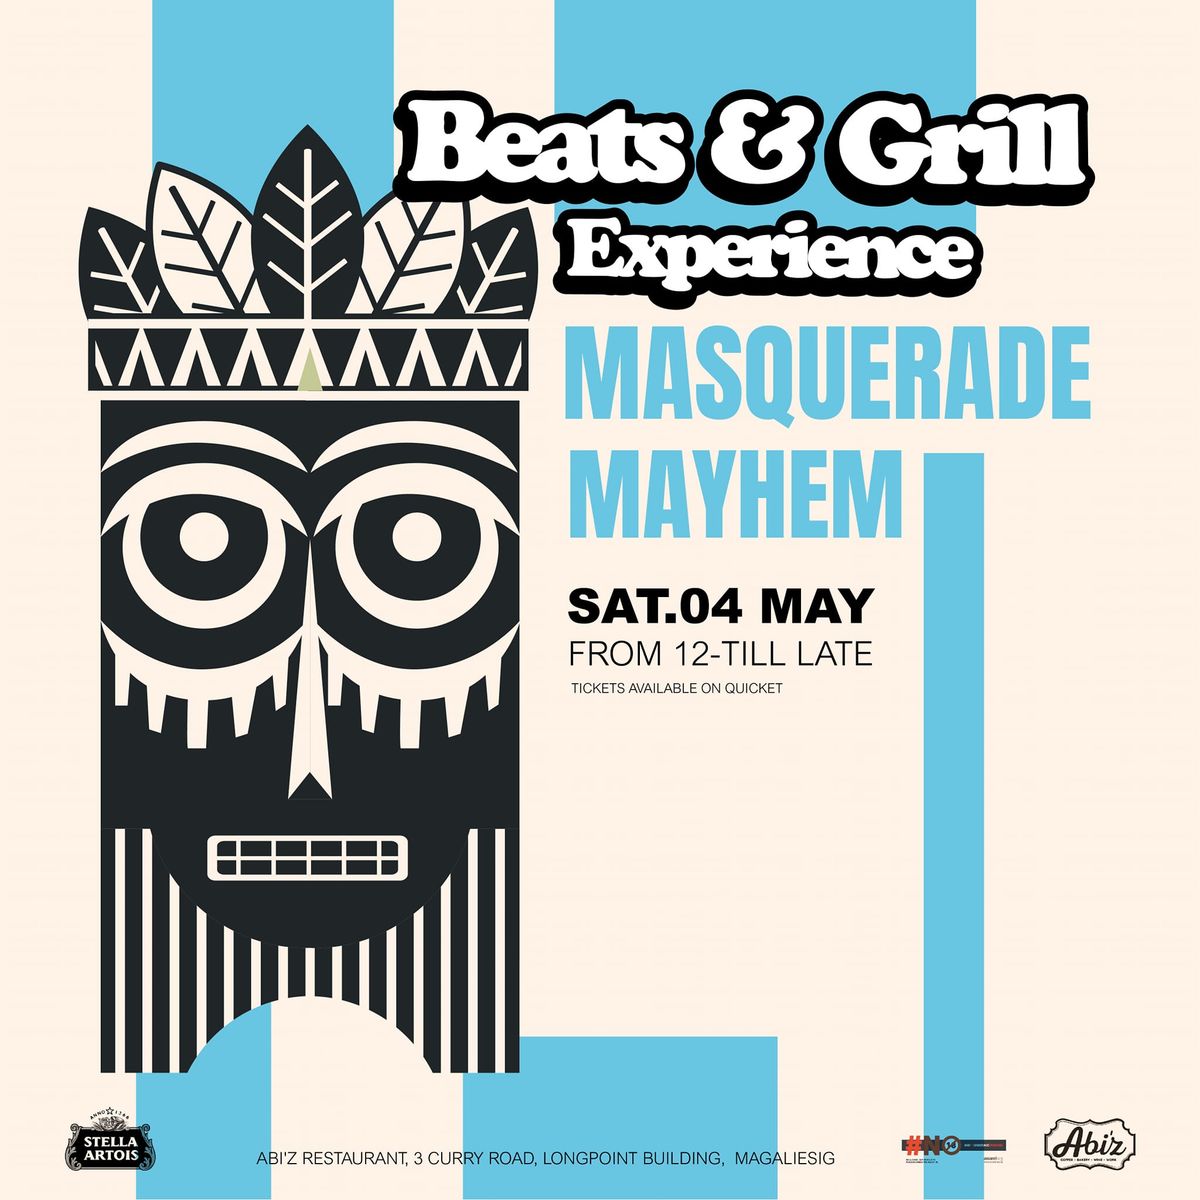 Beats & Grill Experience l Masquerade Mayhem